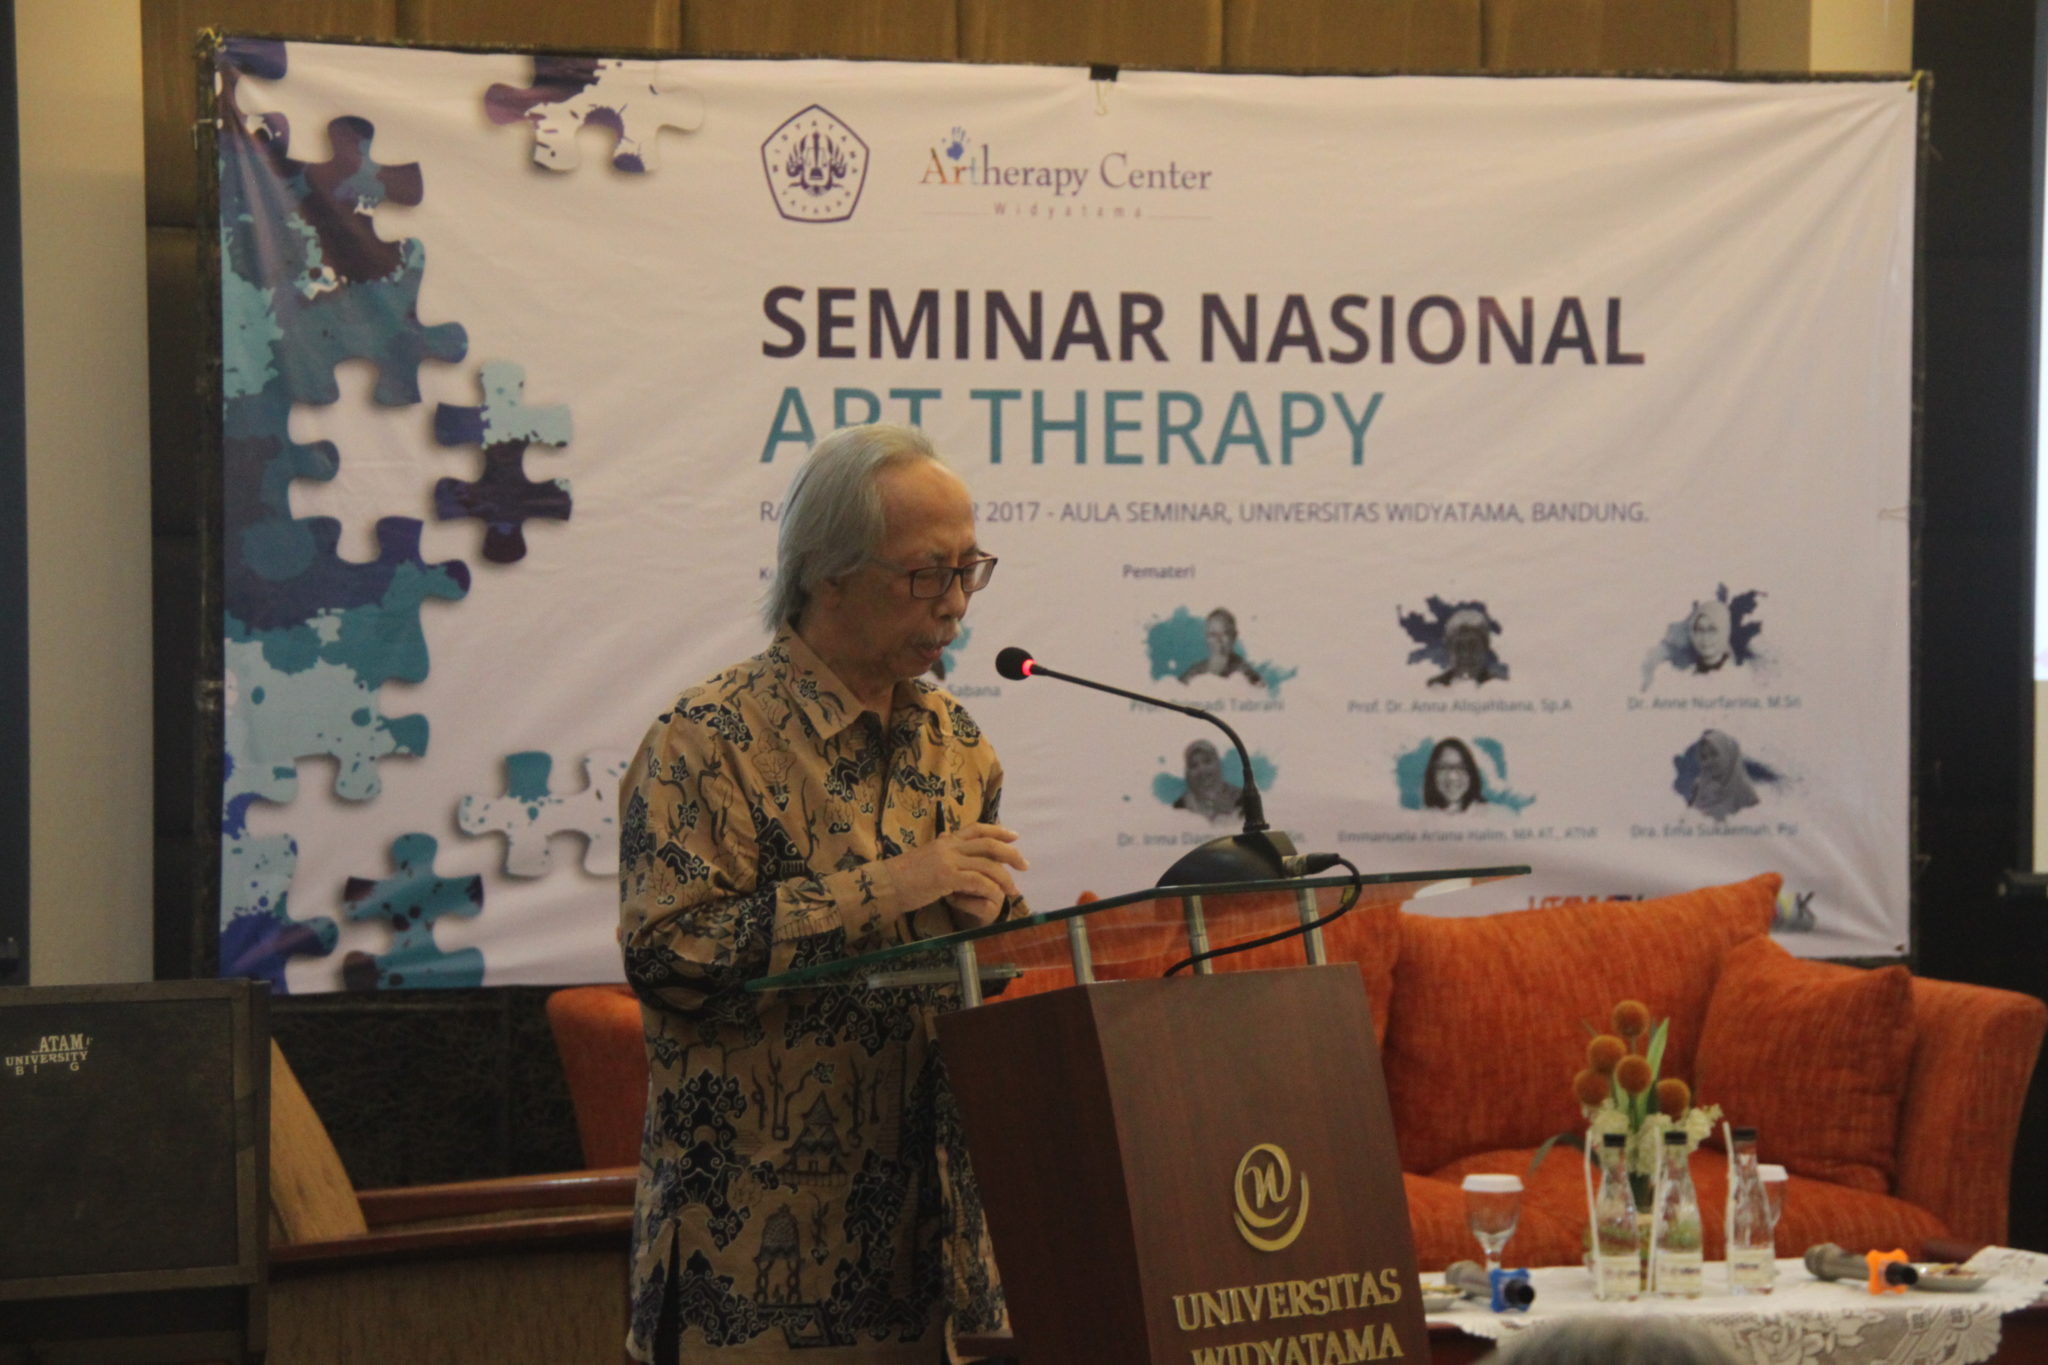 Art Therapy Center Widyatama held a National Seminar